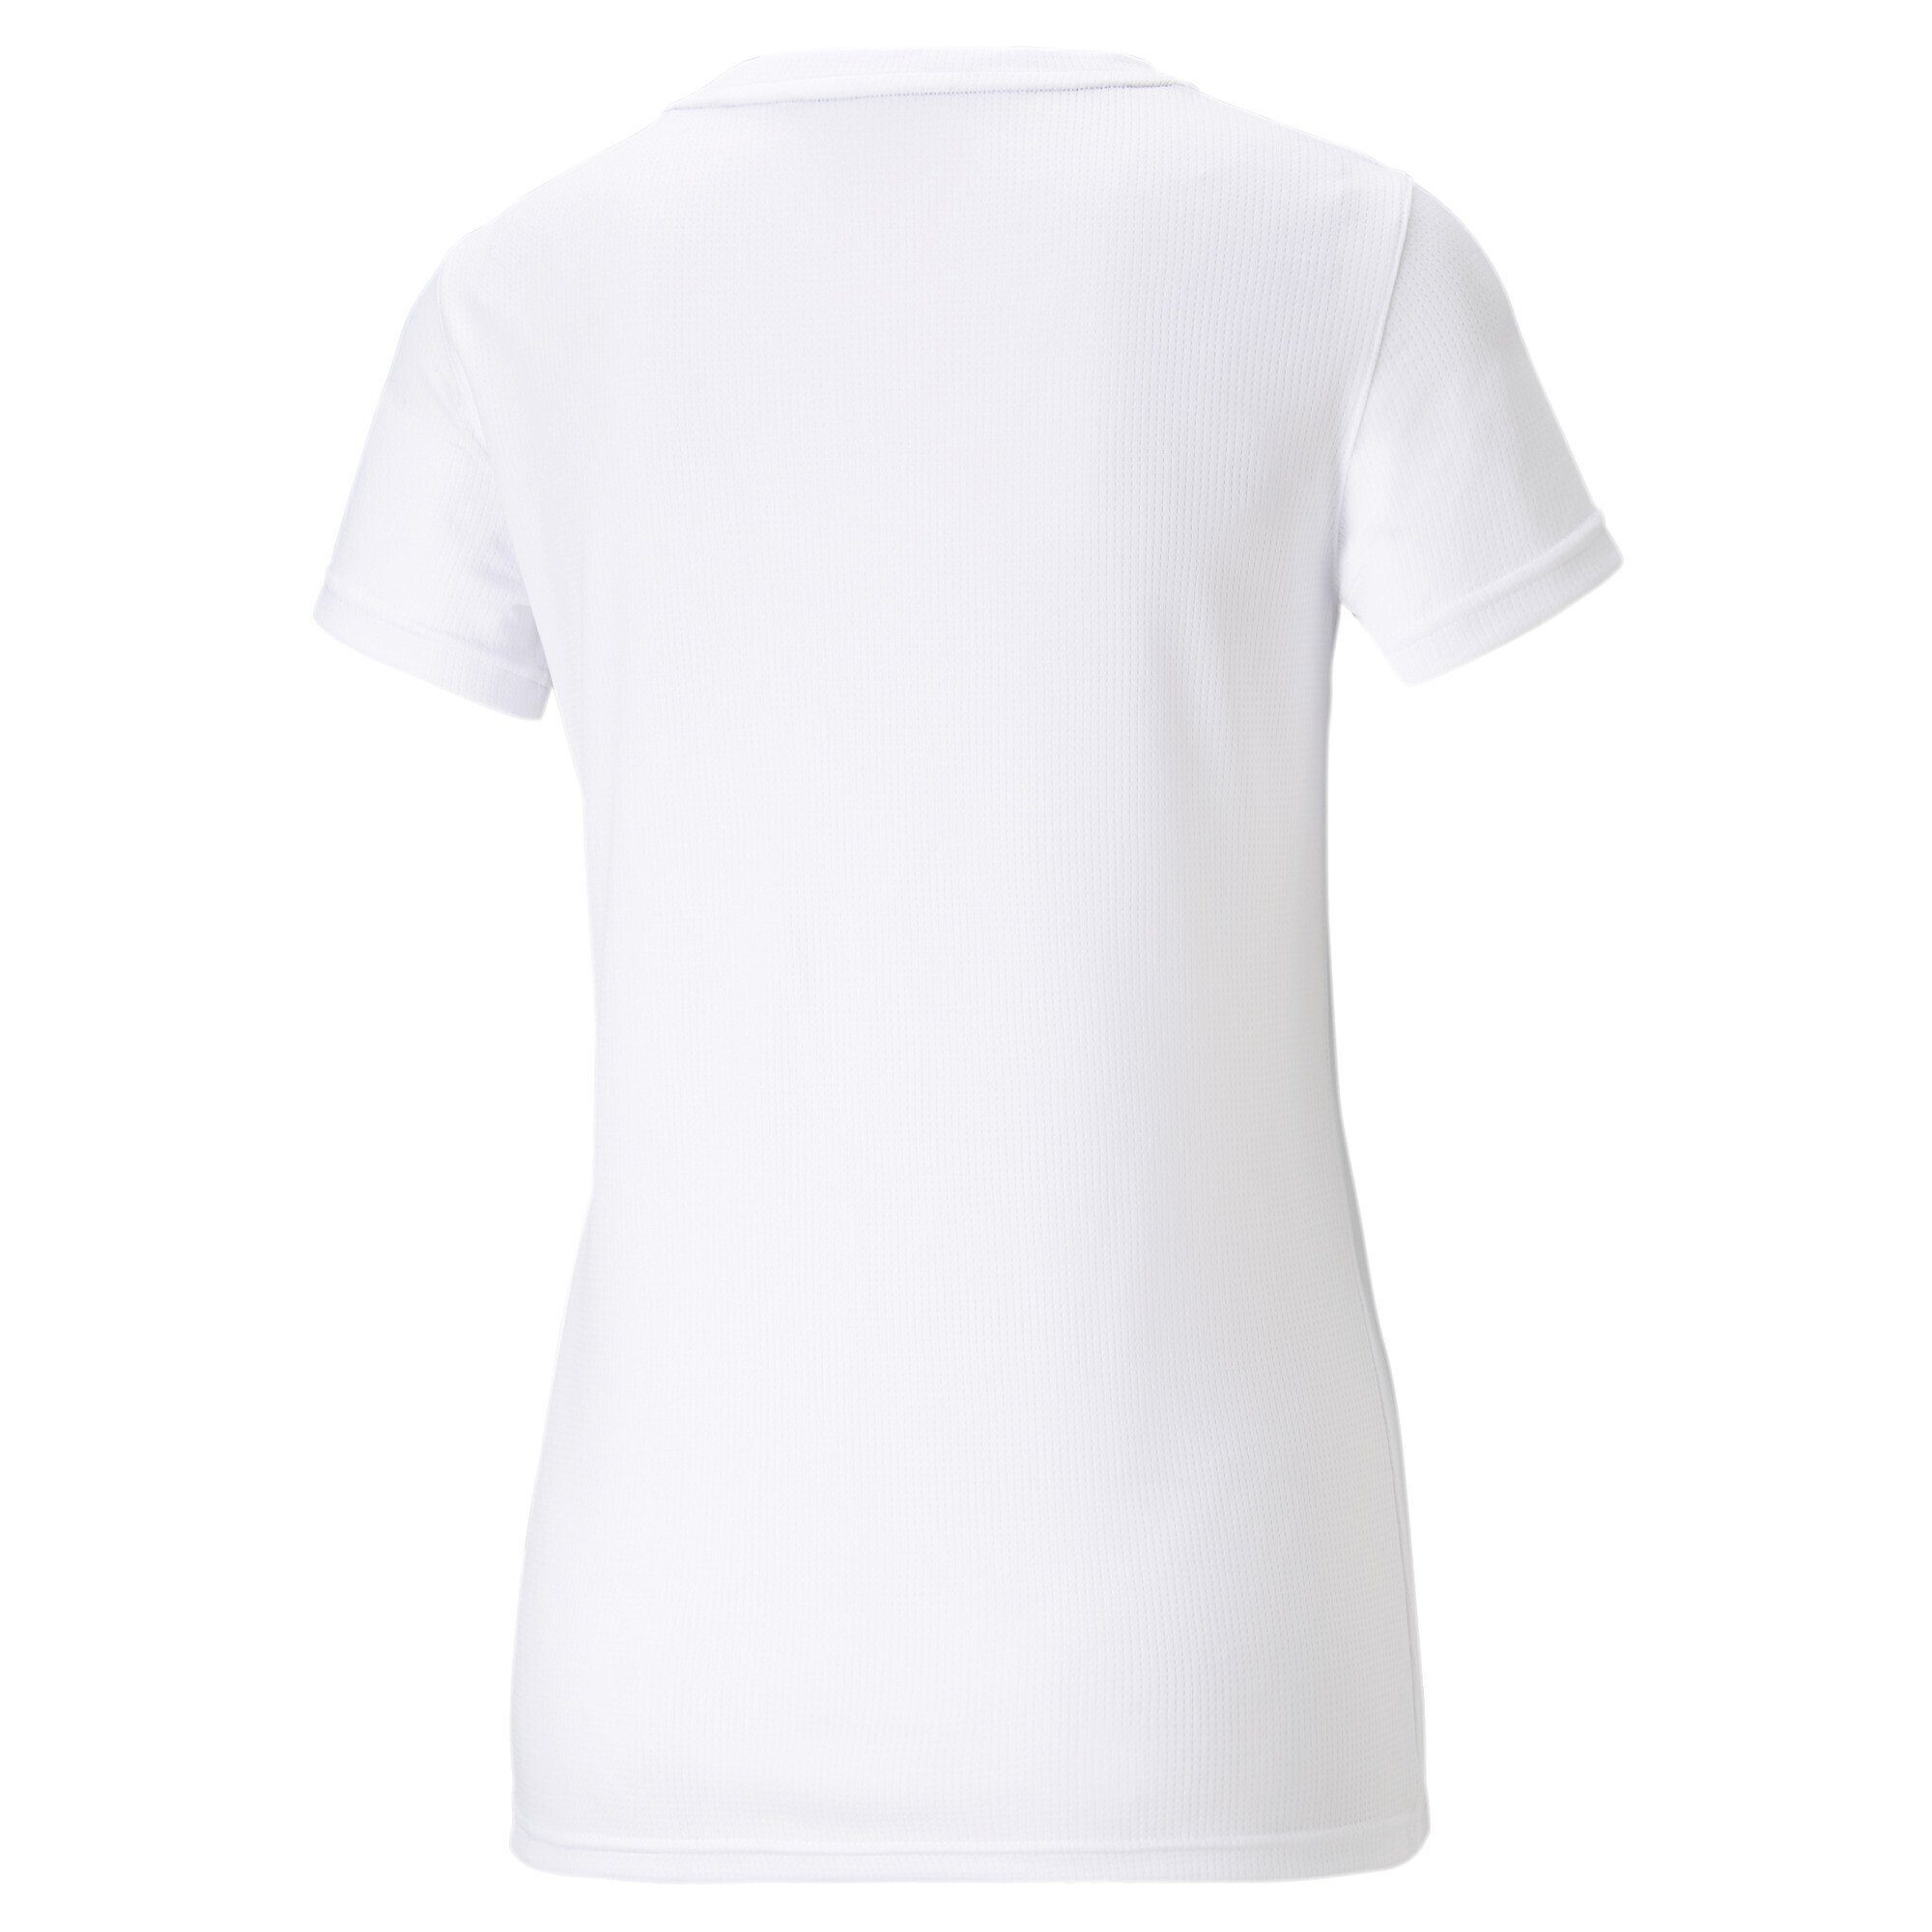 Damen Trainings-T-Shirt Trainingsshirt PUMA Performance White